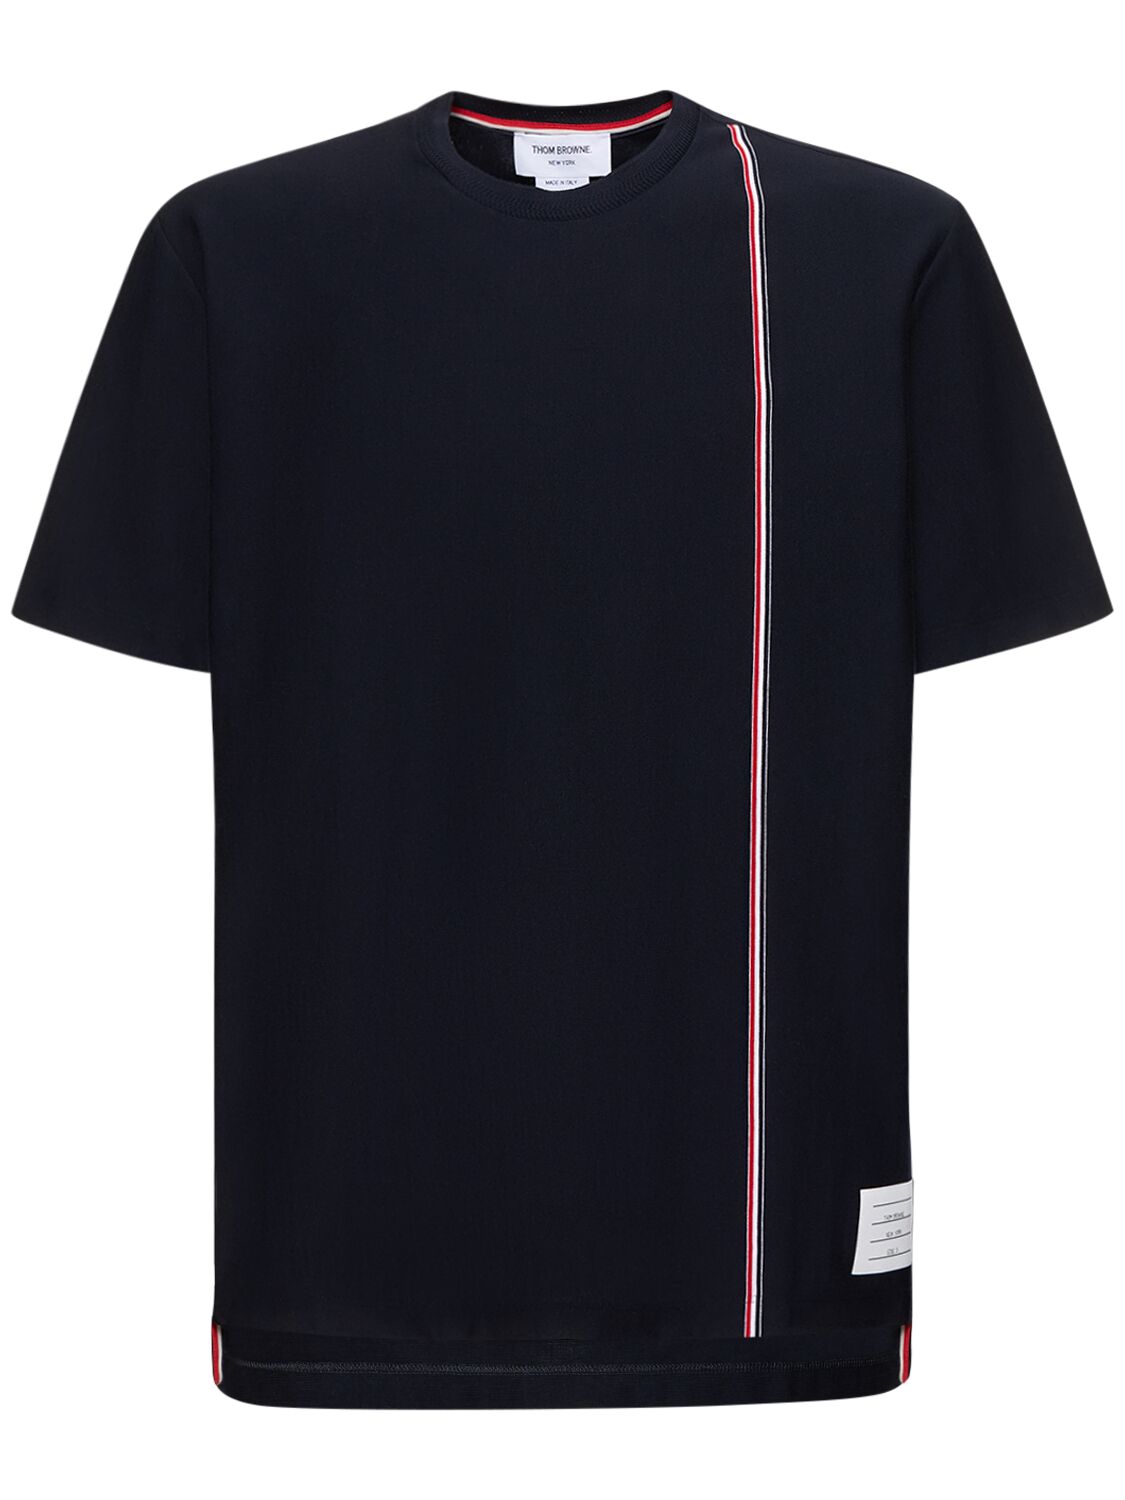 Image of Cotton S/s T-shirt W/ Stripe